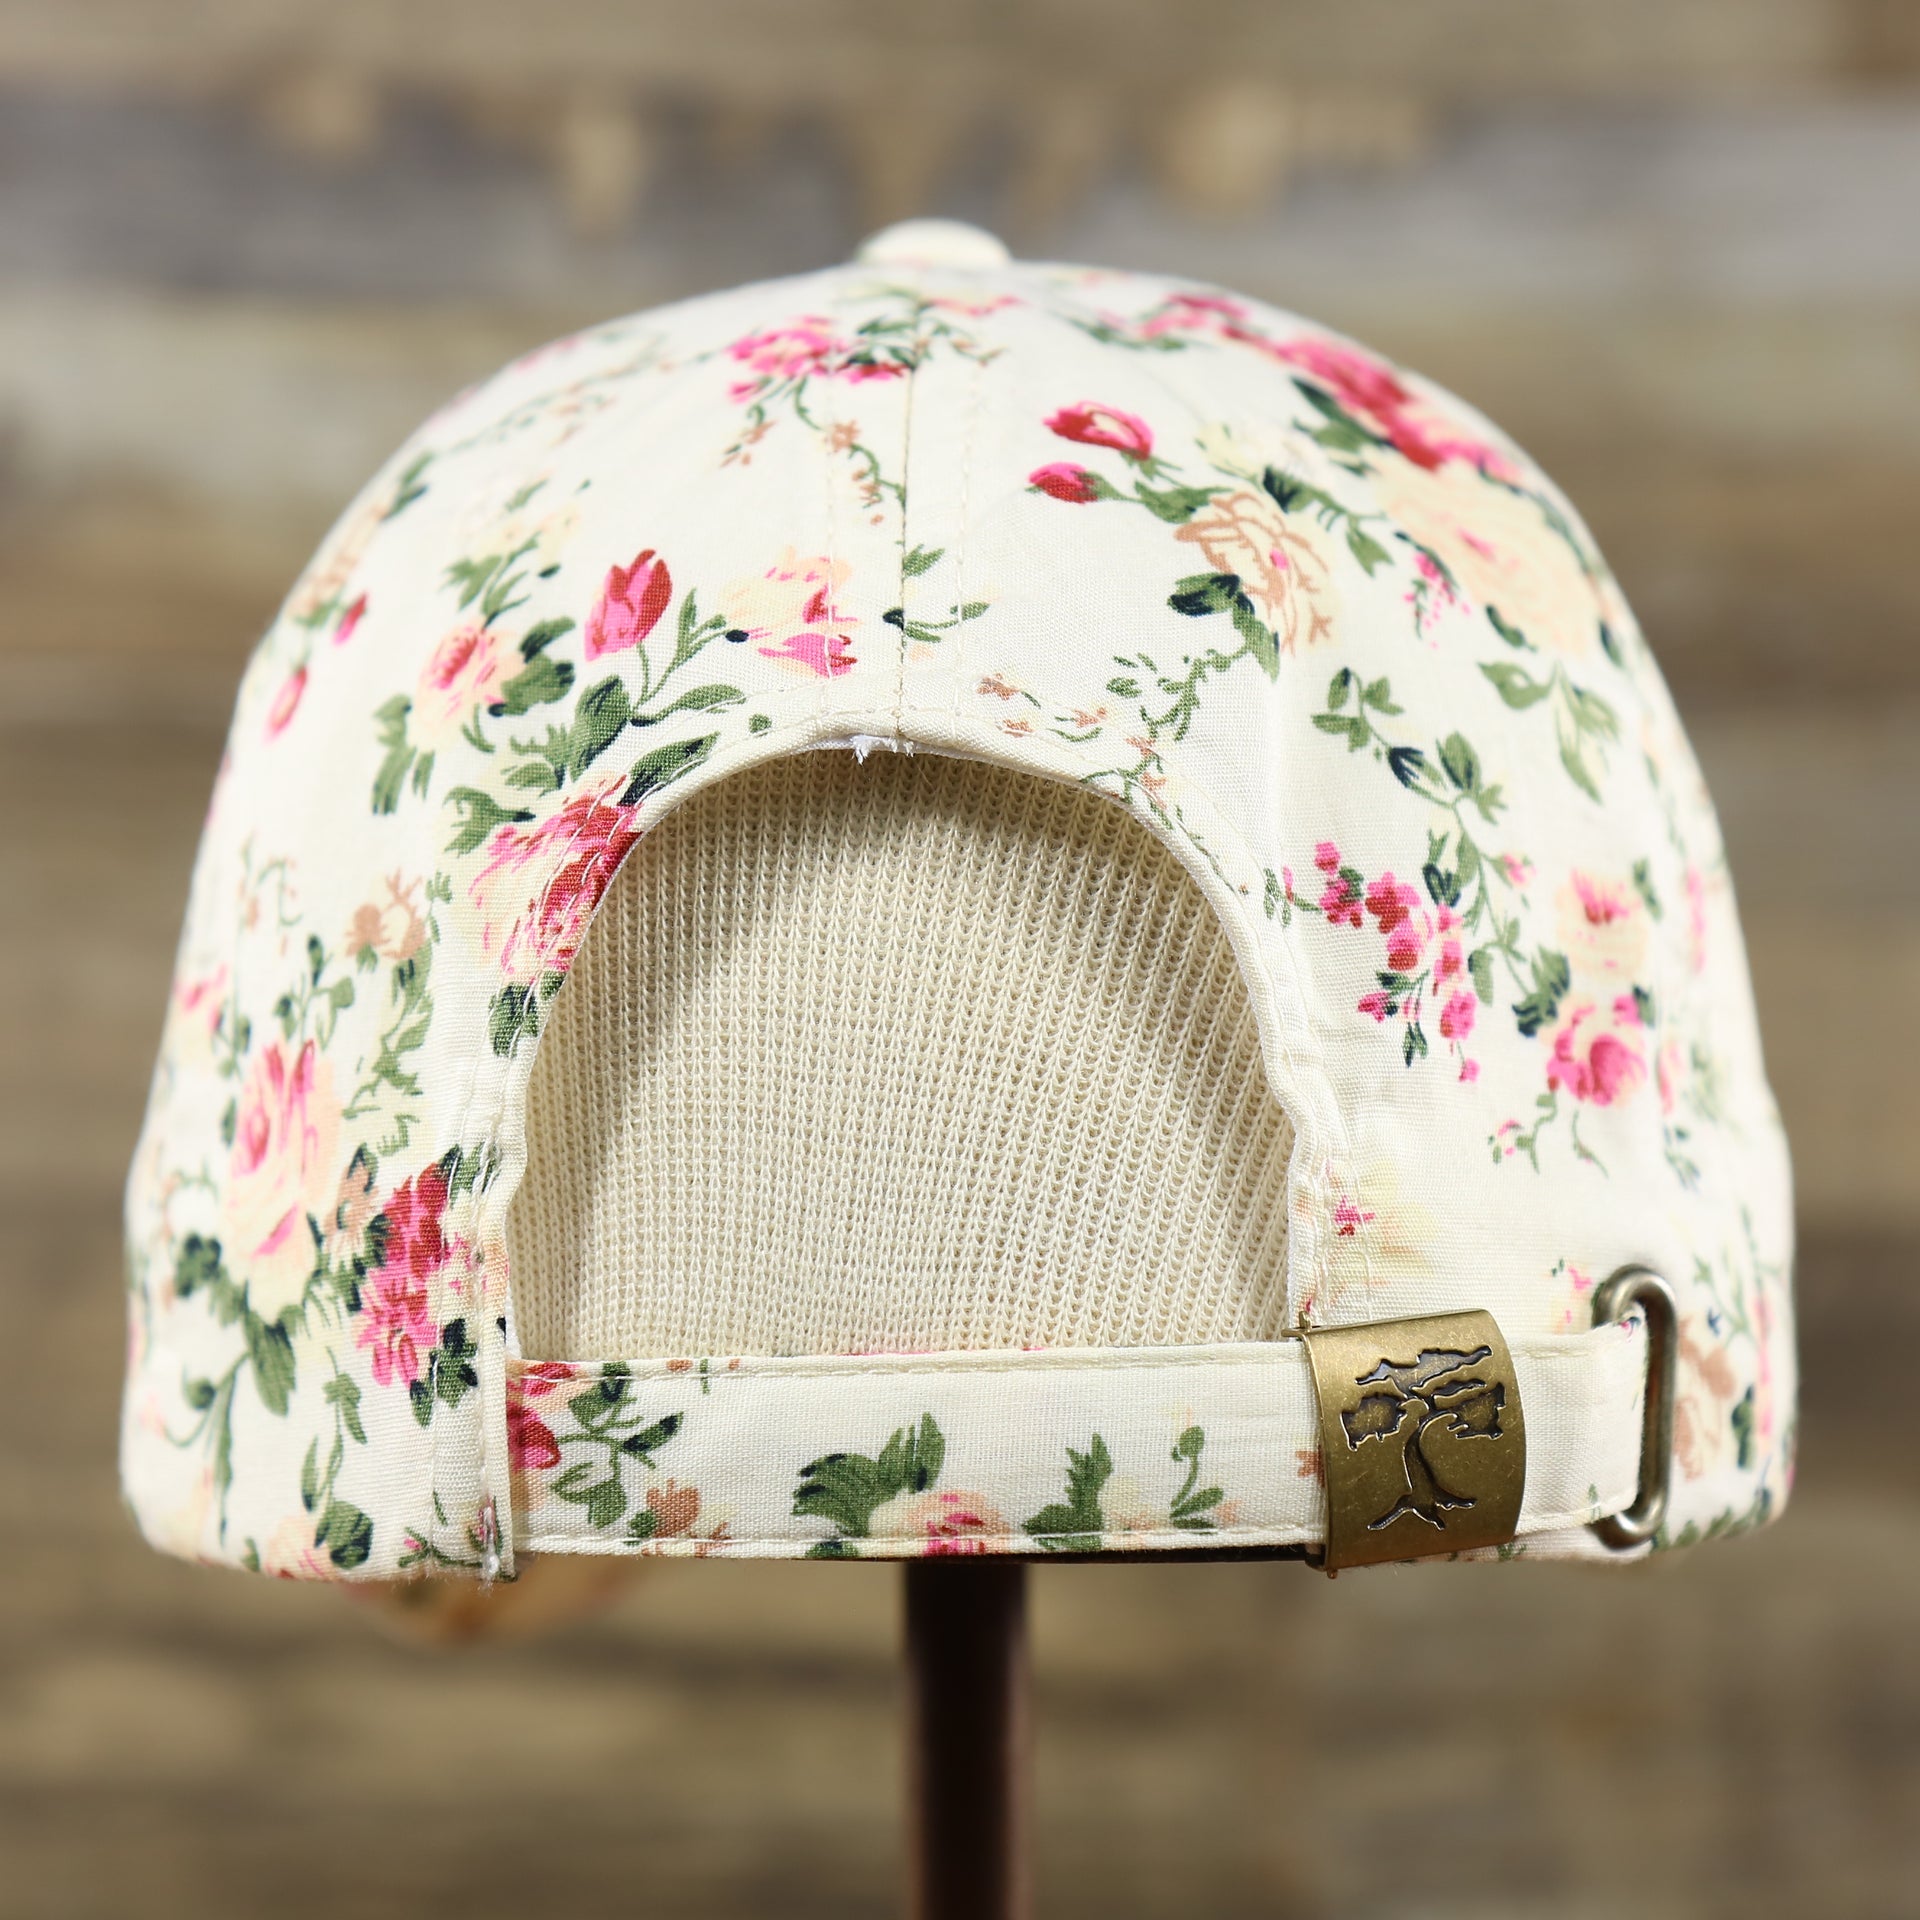 The backside of the Floral Print Blank Adjustable Baseball Hat | Cream Dad Hat